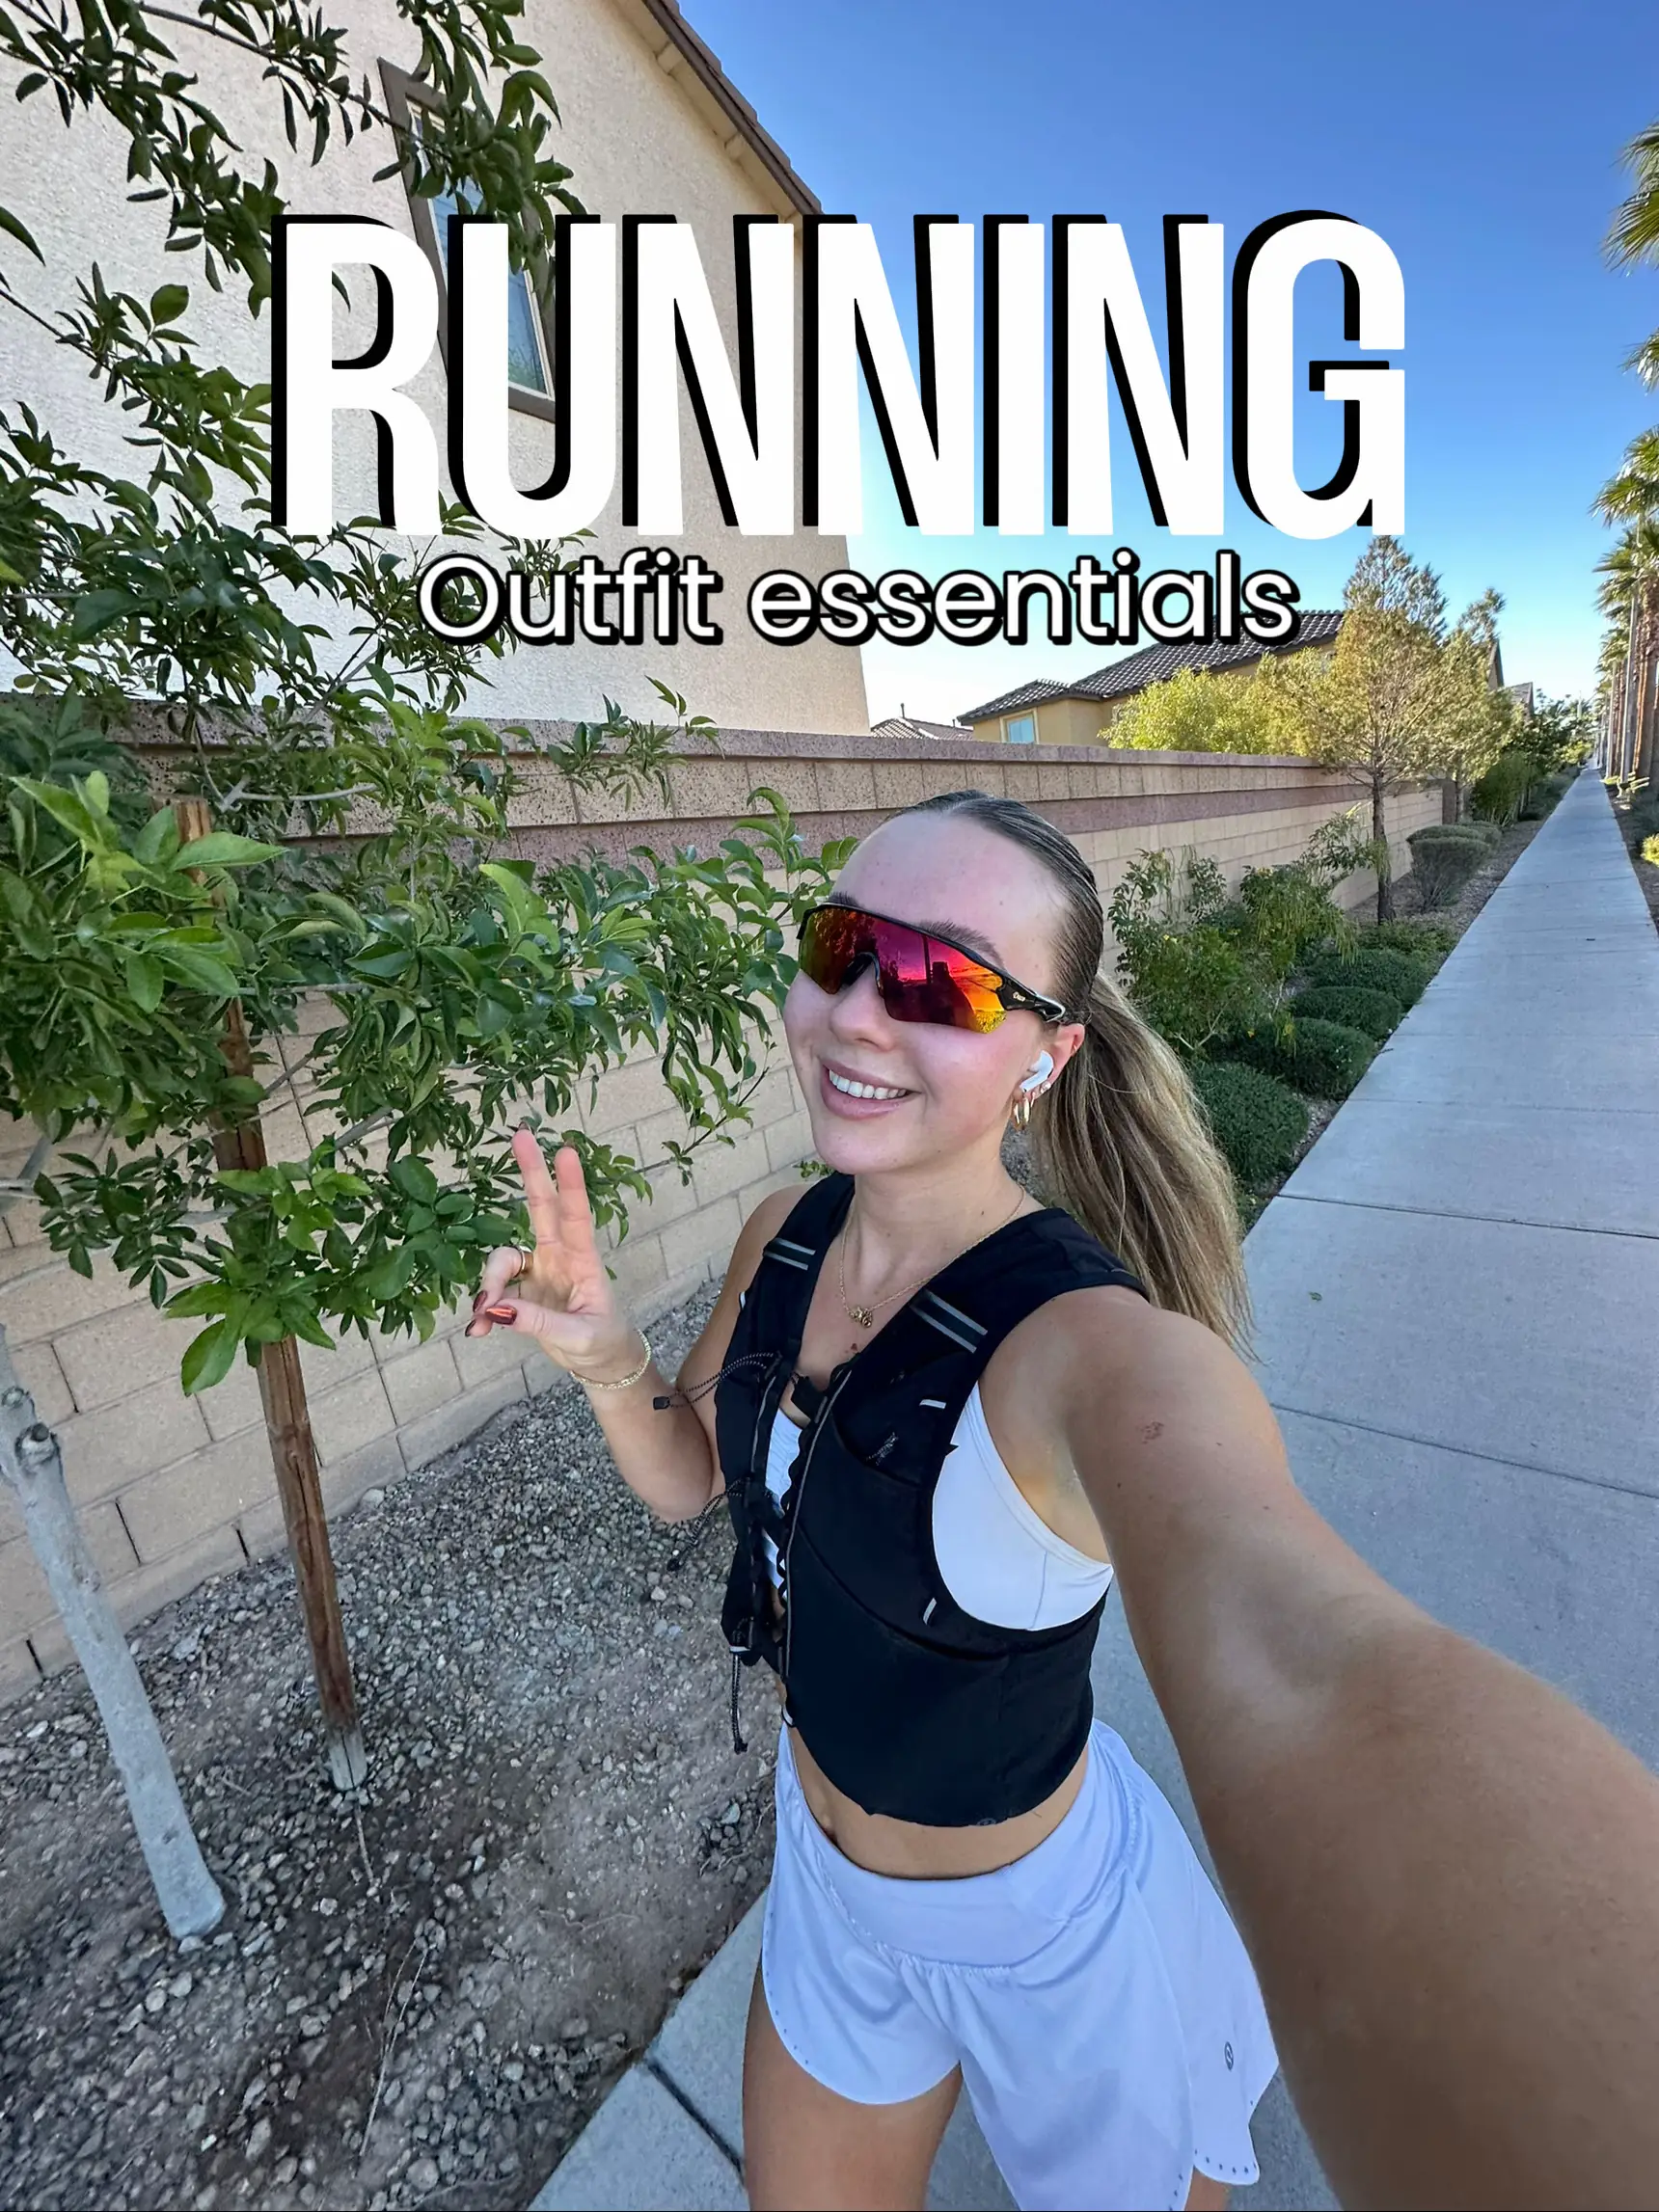 Running OOTD is giving bada$ runner girl vibes 💜🏃🏻‍♀️ launching TO